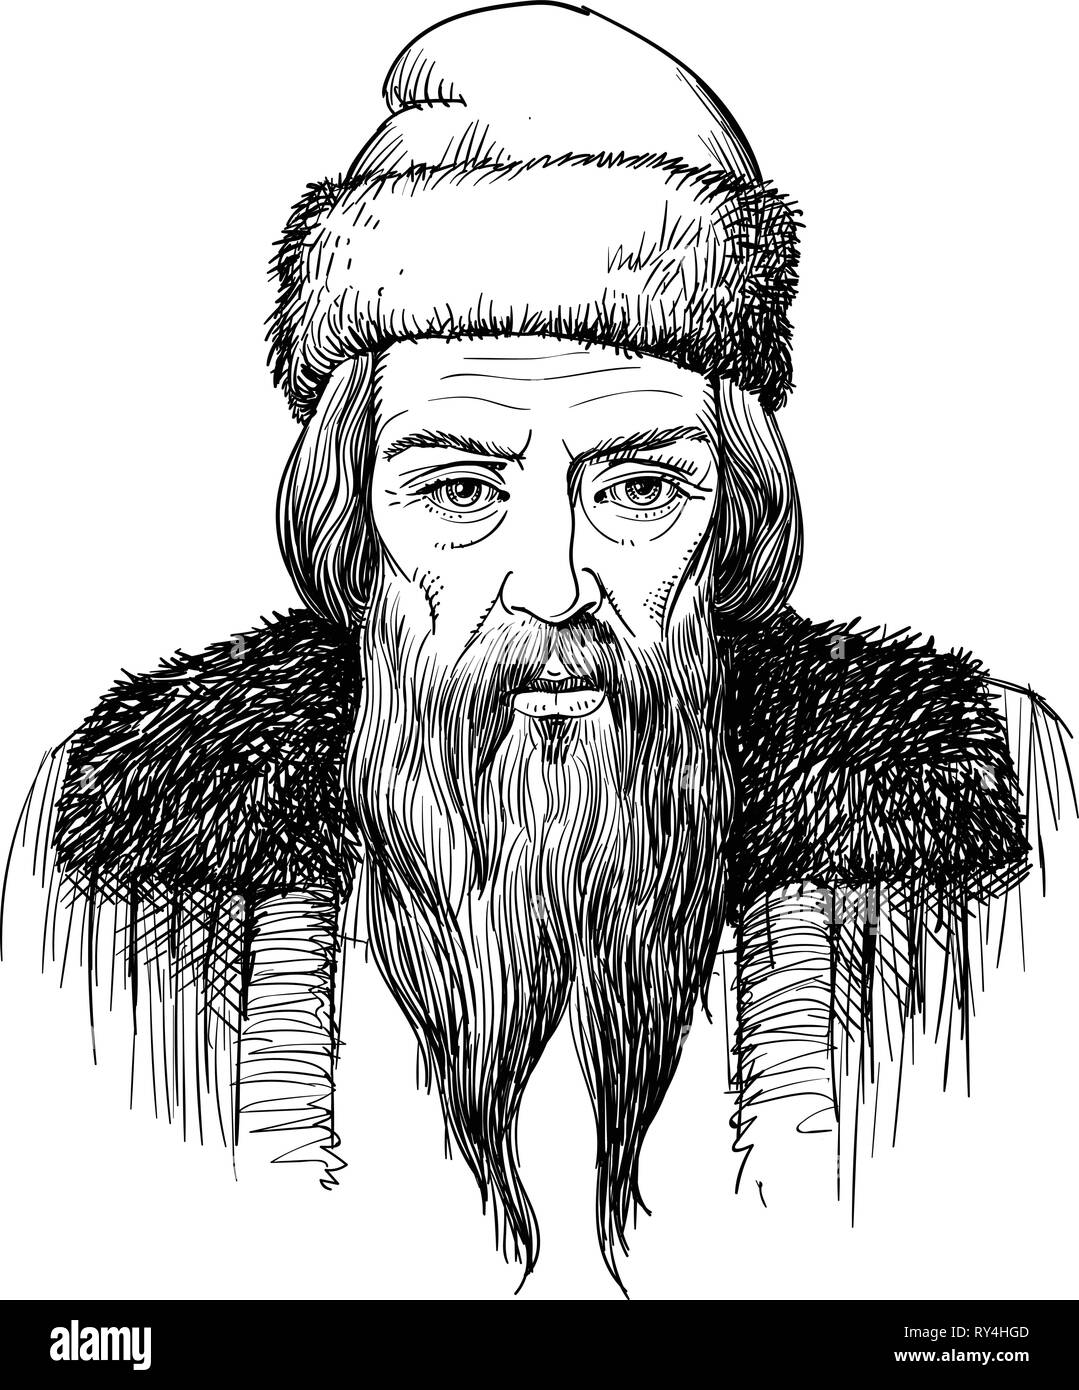 Johannes Gutenberg portrait in line art illustration. First printer, publisher of the first European Bible. Stock Vector